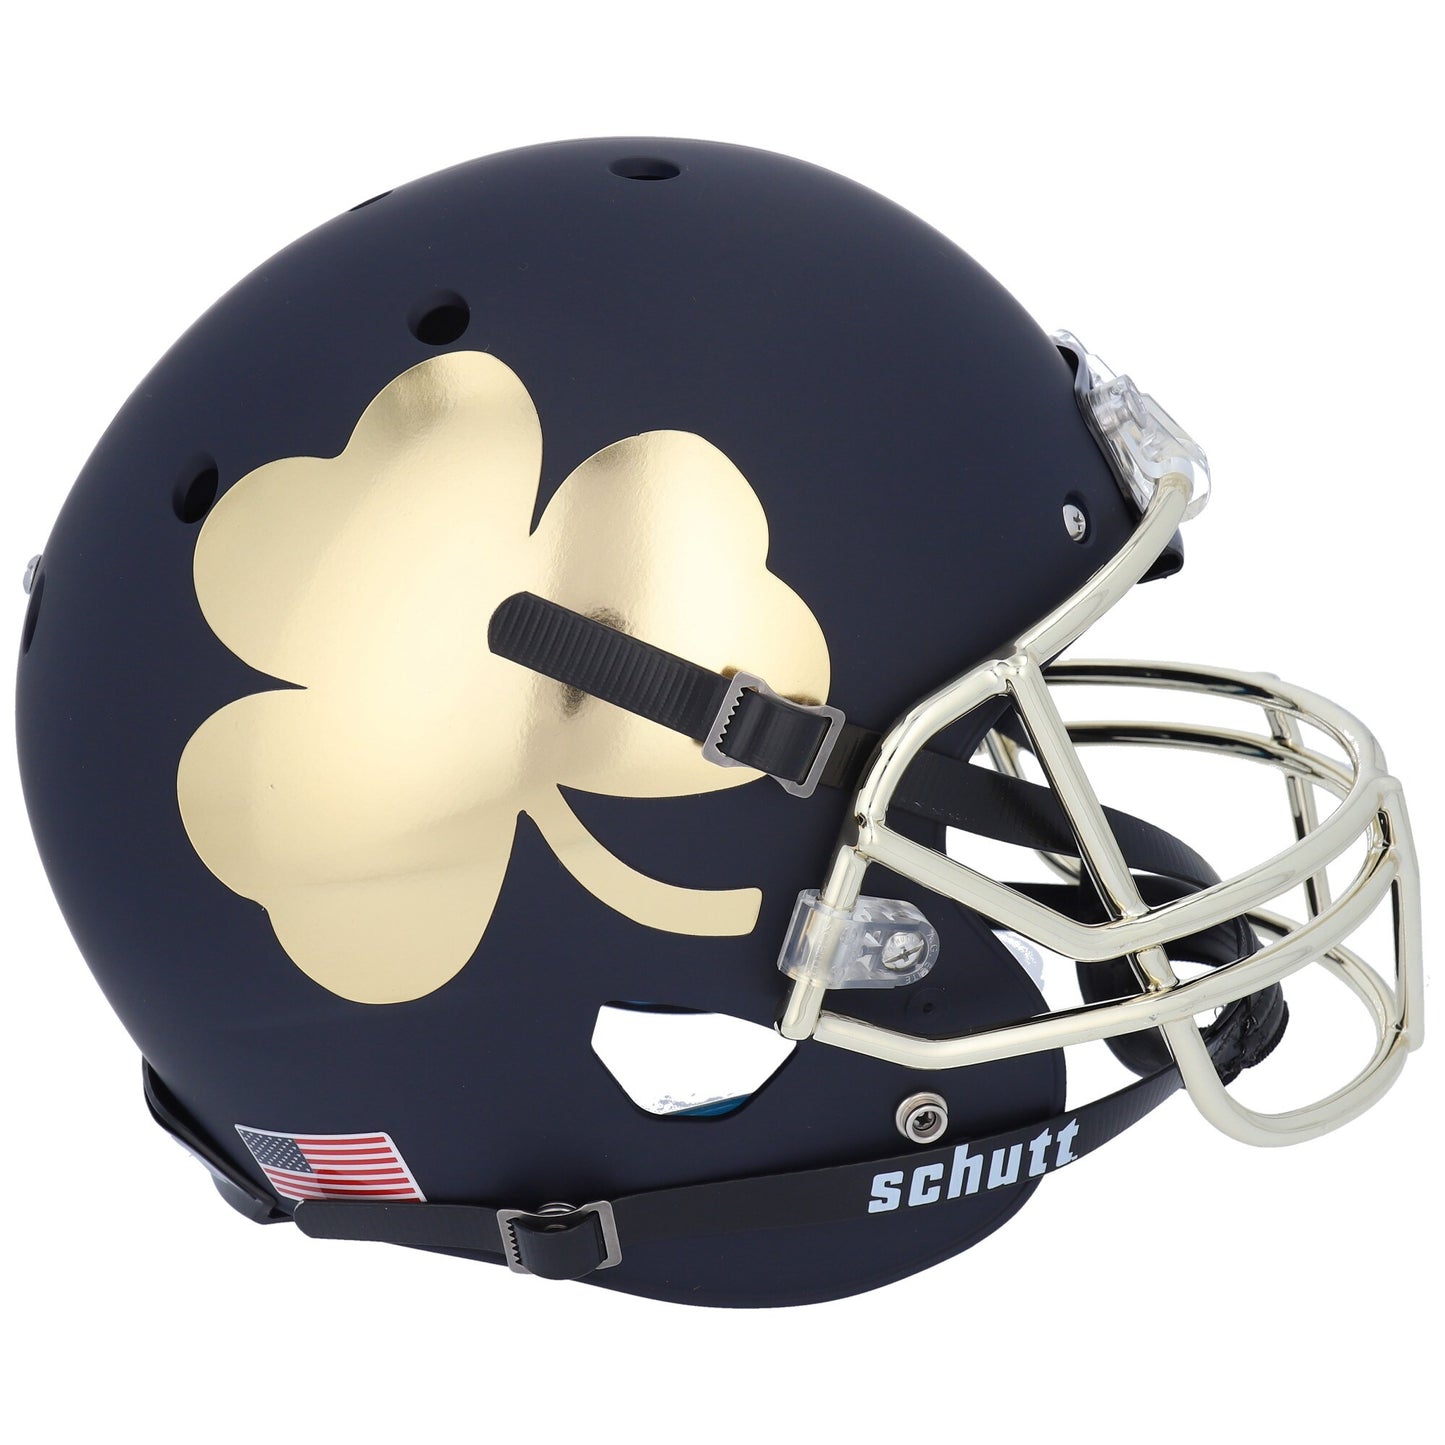 Notre Dame Fighting Irish Schutt Tradition Authentic Helmet